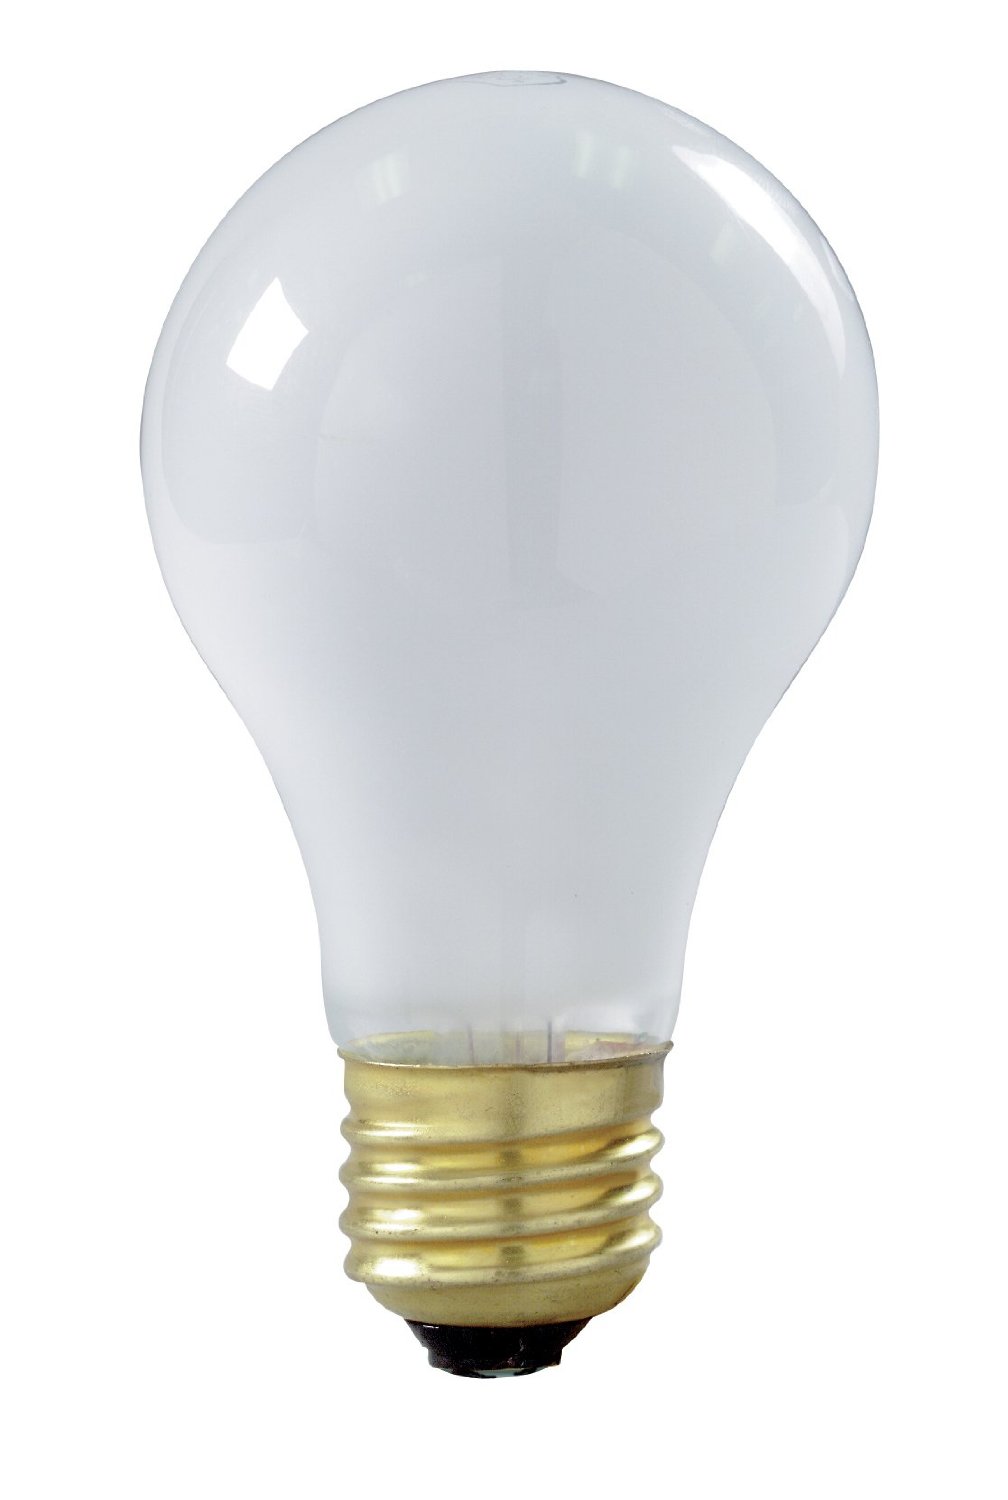 buy rough service light bulbs at cheap rate in bulk. wholesale & retail lamps & light fixtures store. home décor ideas, maintenance, repair replacement parts